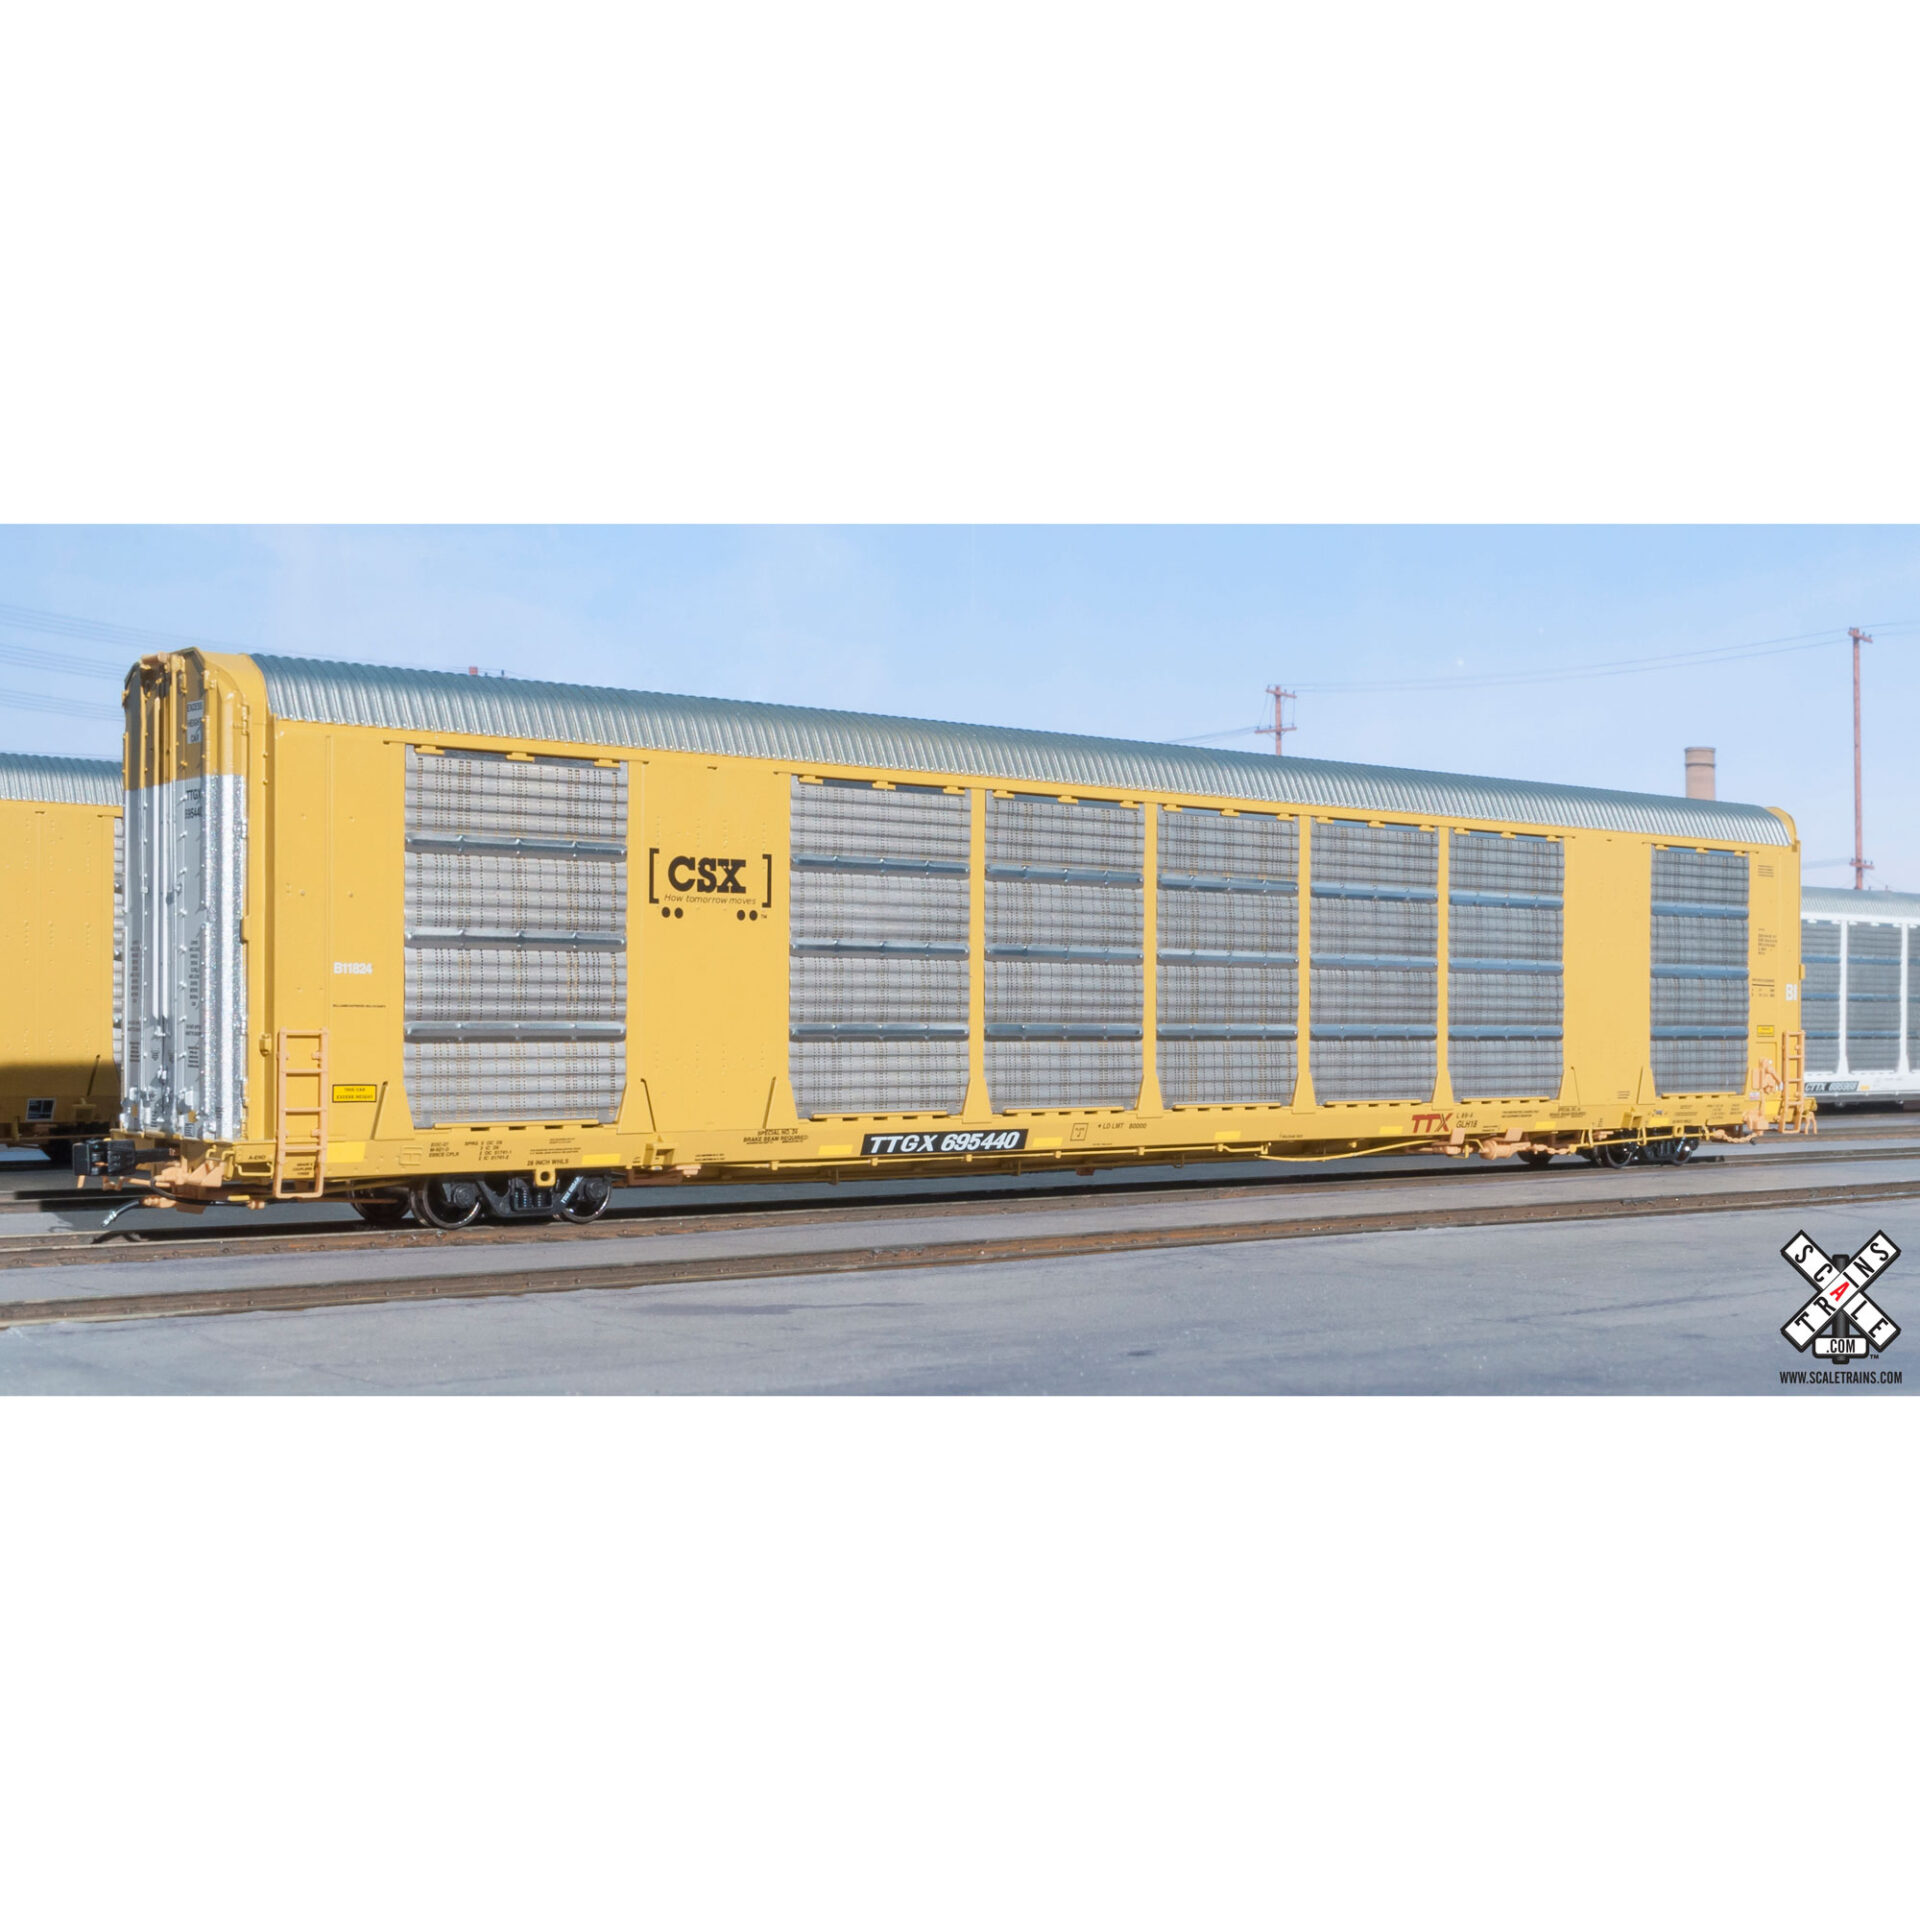 Scale Trains Ho Rivet Counter Gunderson Multi Max Autorack Csx Boxcar